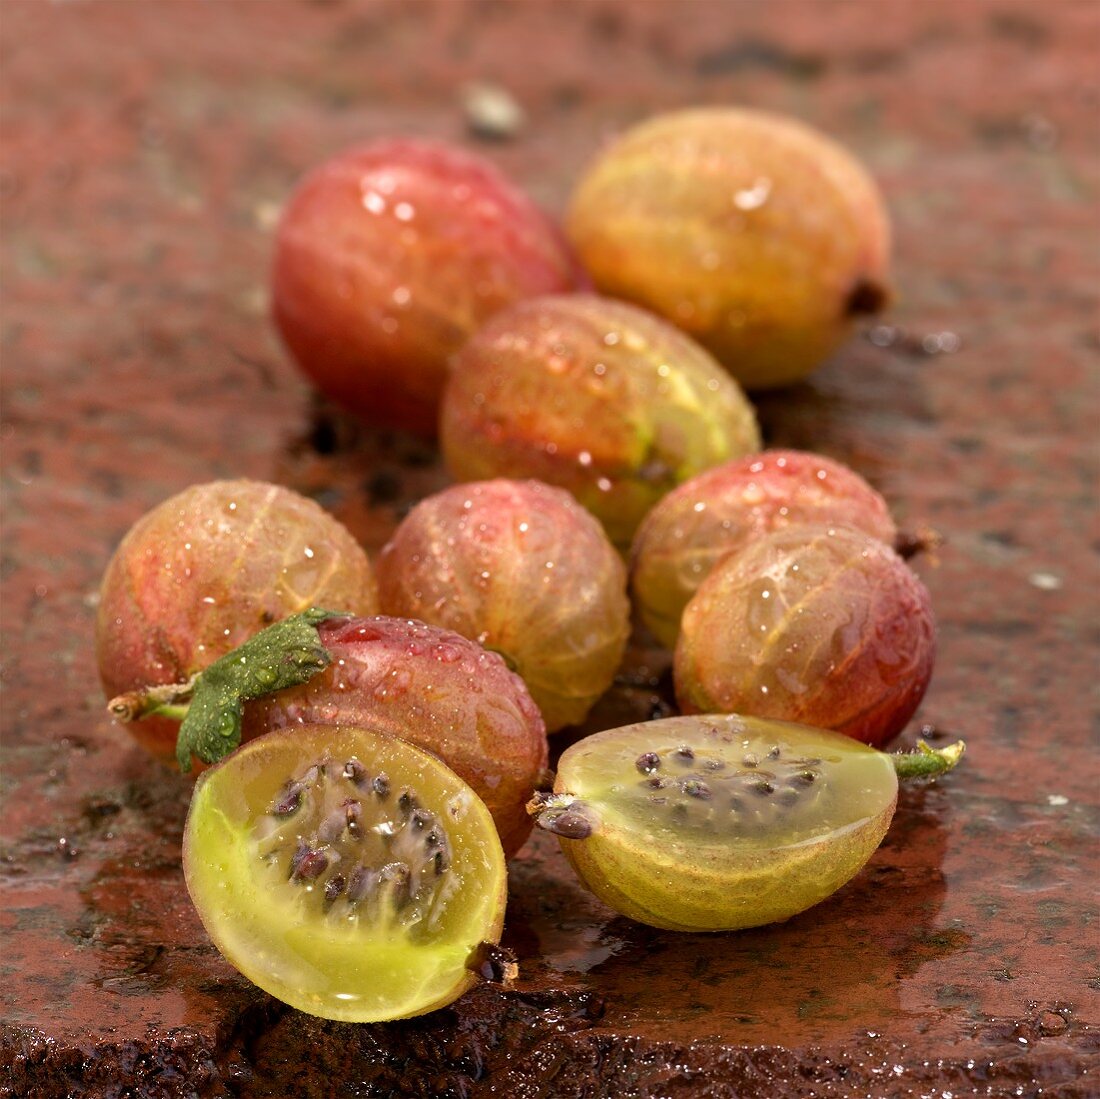 Gooseberries with drops of water